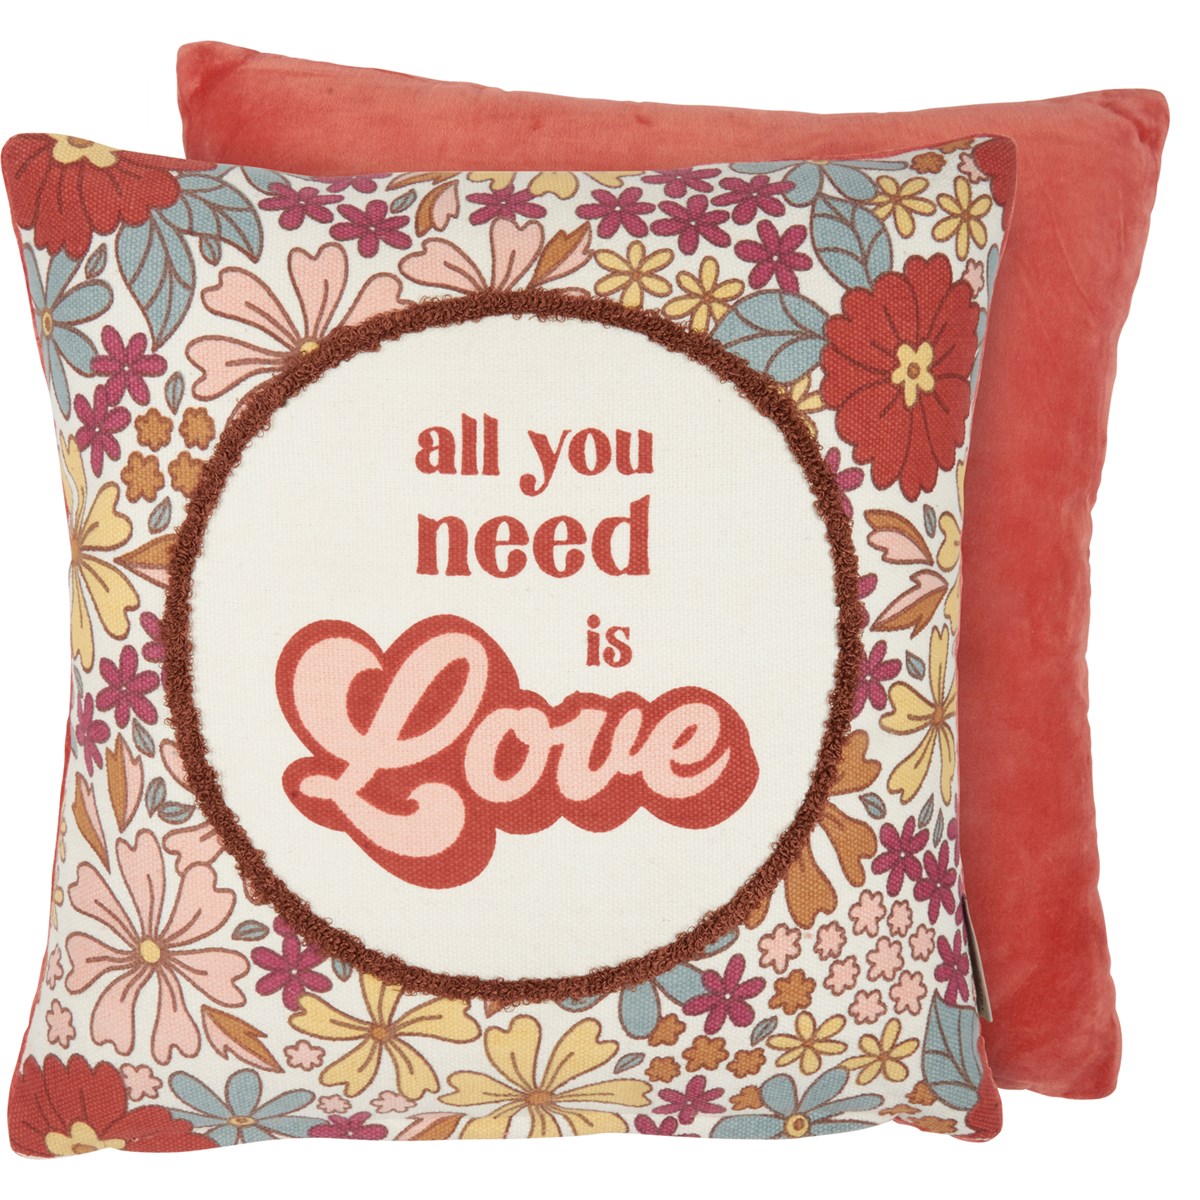 Pillow - All You Need Is Love - 15" x 15" - Cotton, Velvet, Zipper